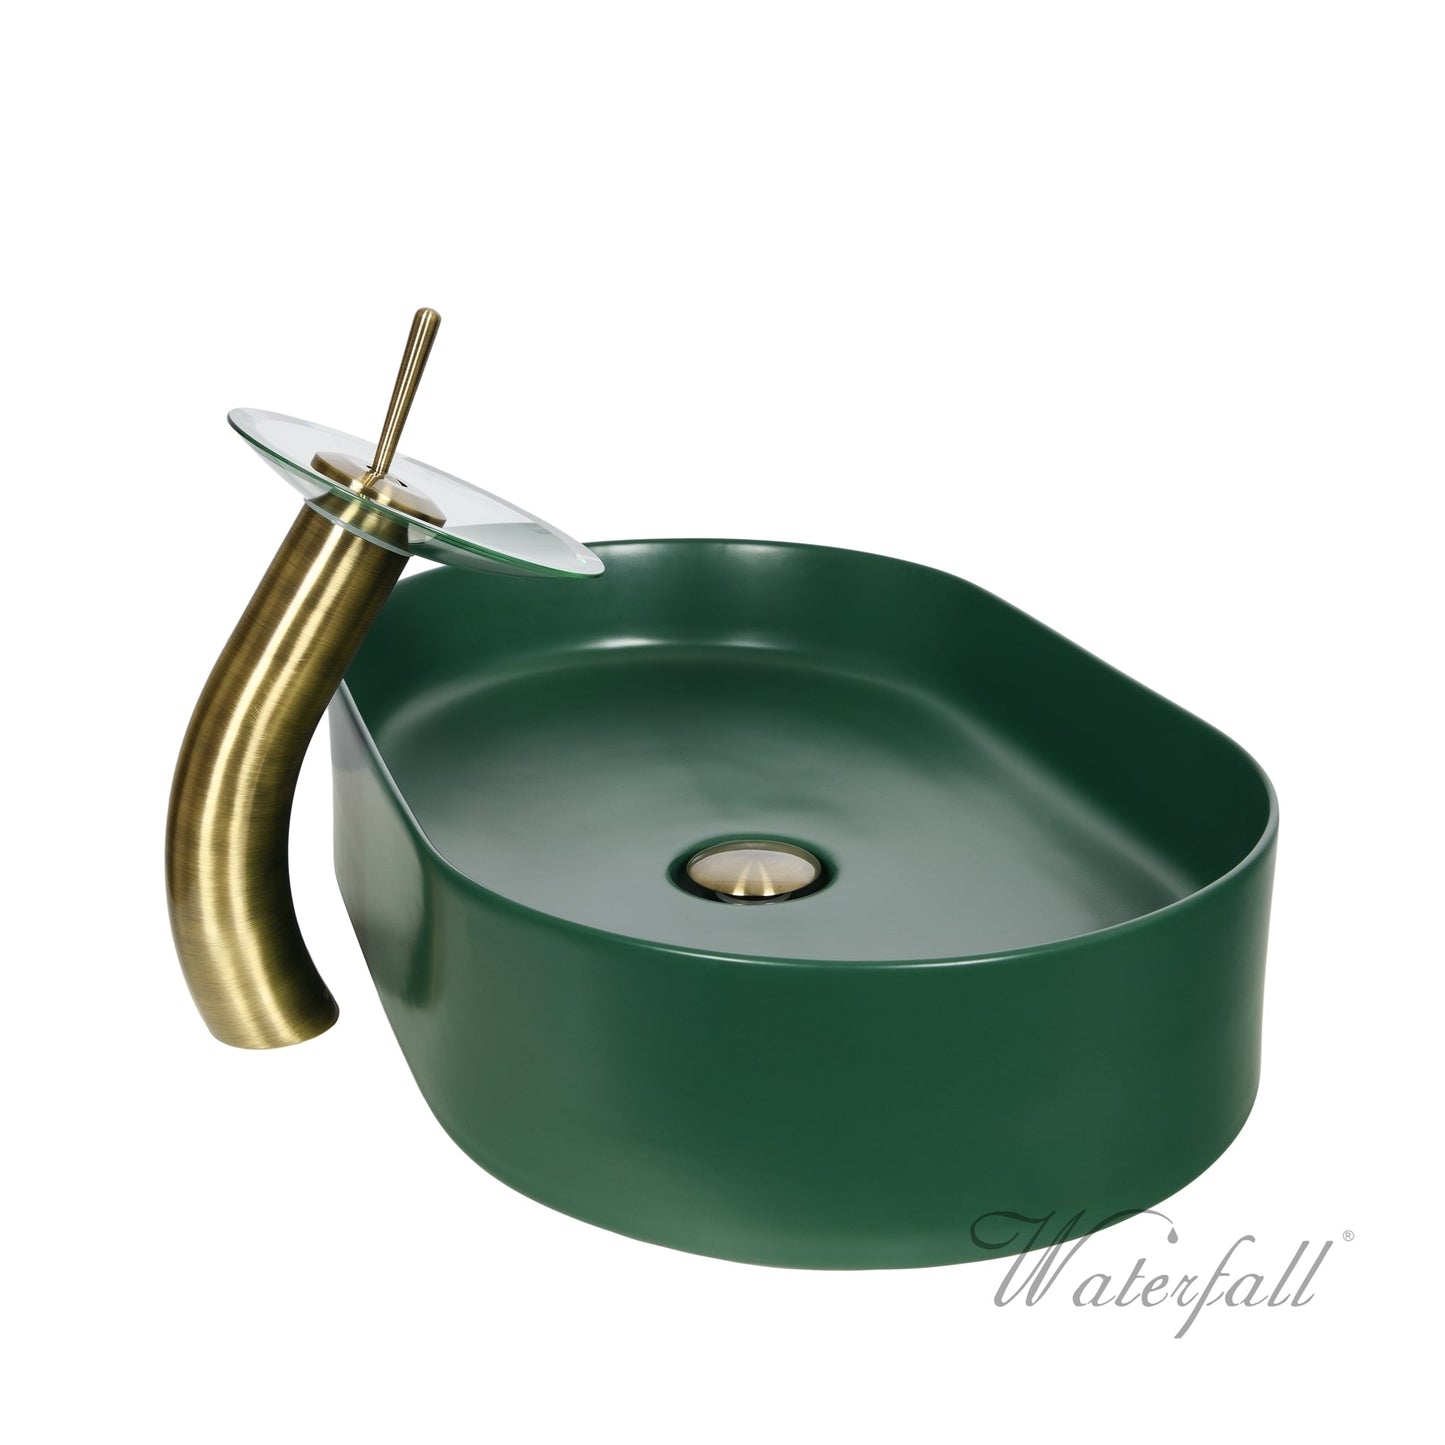 Moss Green Ceramic Sink Combo Waterfall® Bathroom Faucet Set - |VESIMI Design| Luxury Bathrooms & Deco